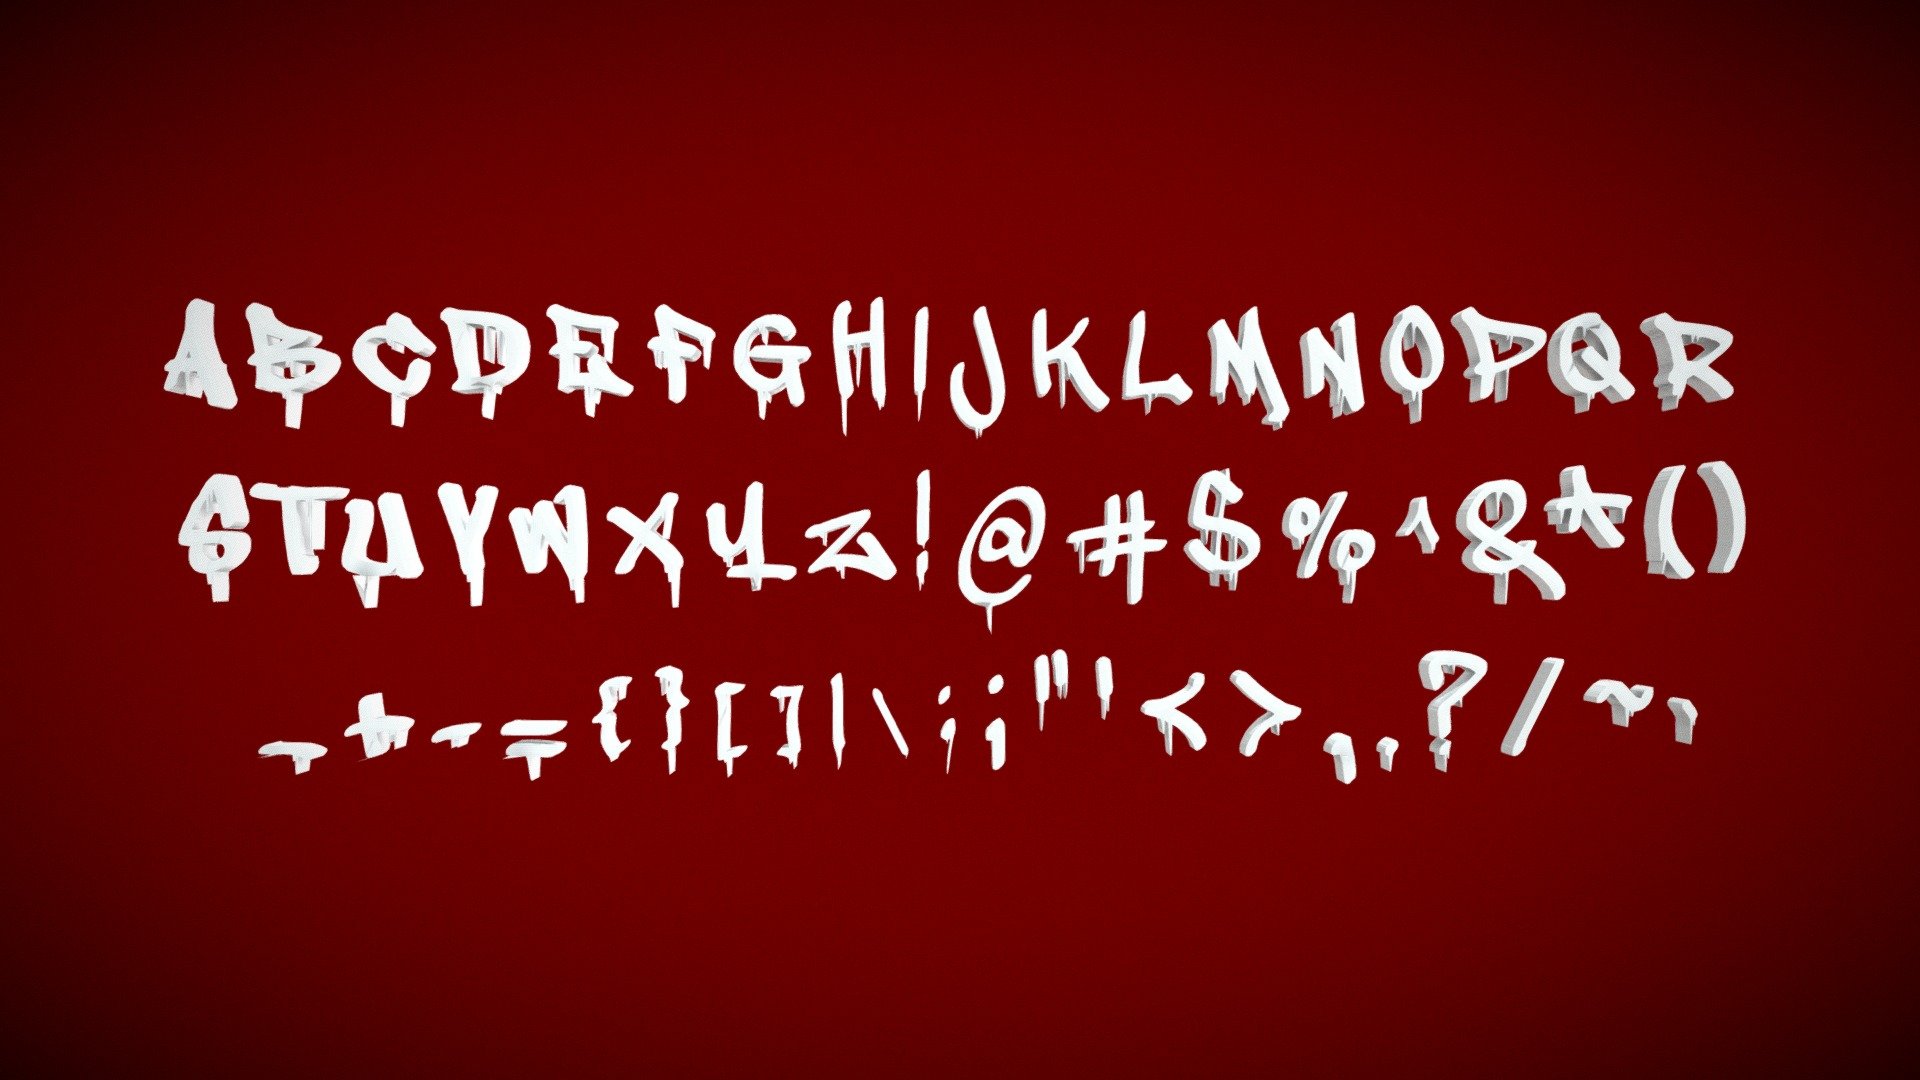 58 Graffiti Horror 3d Alphabet Text Font Buy Royalty Free 3d Model By Sam3d Samuelcrevier12 5213